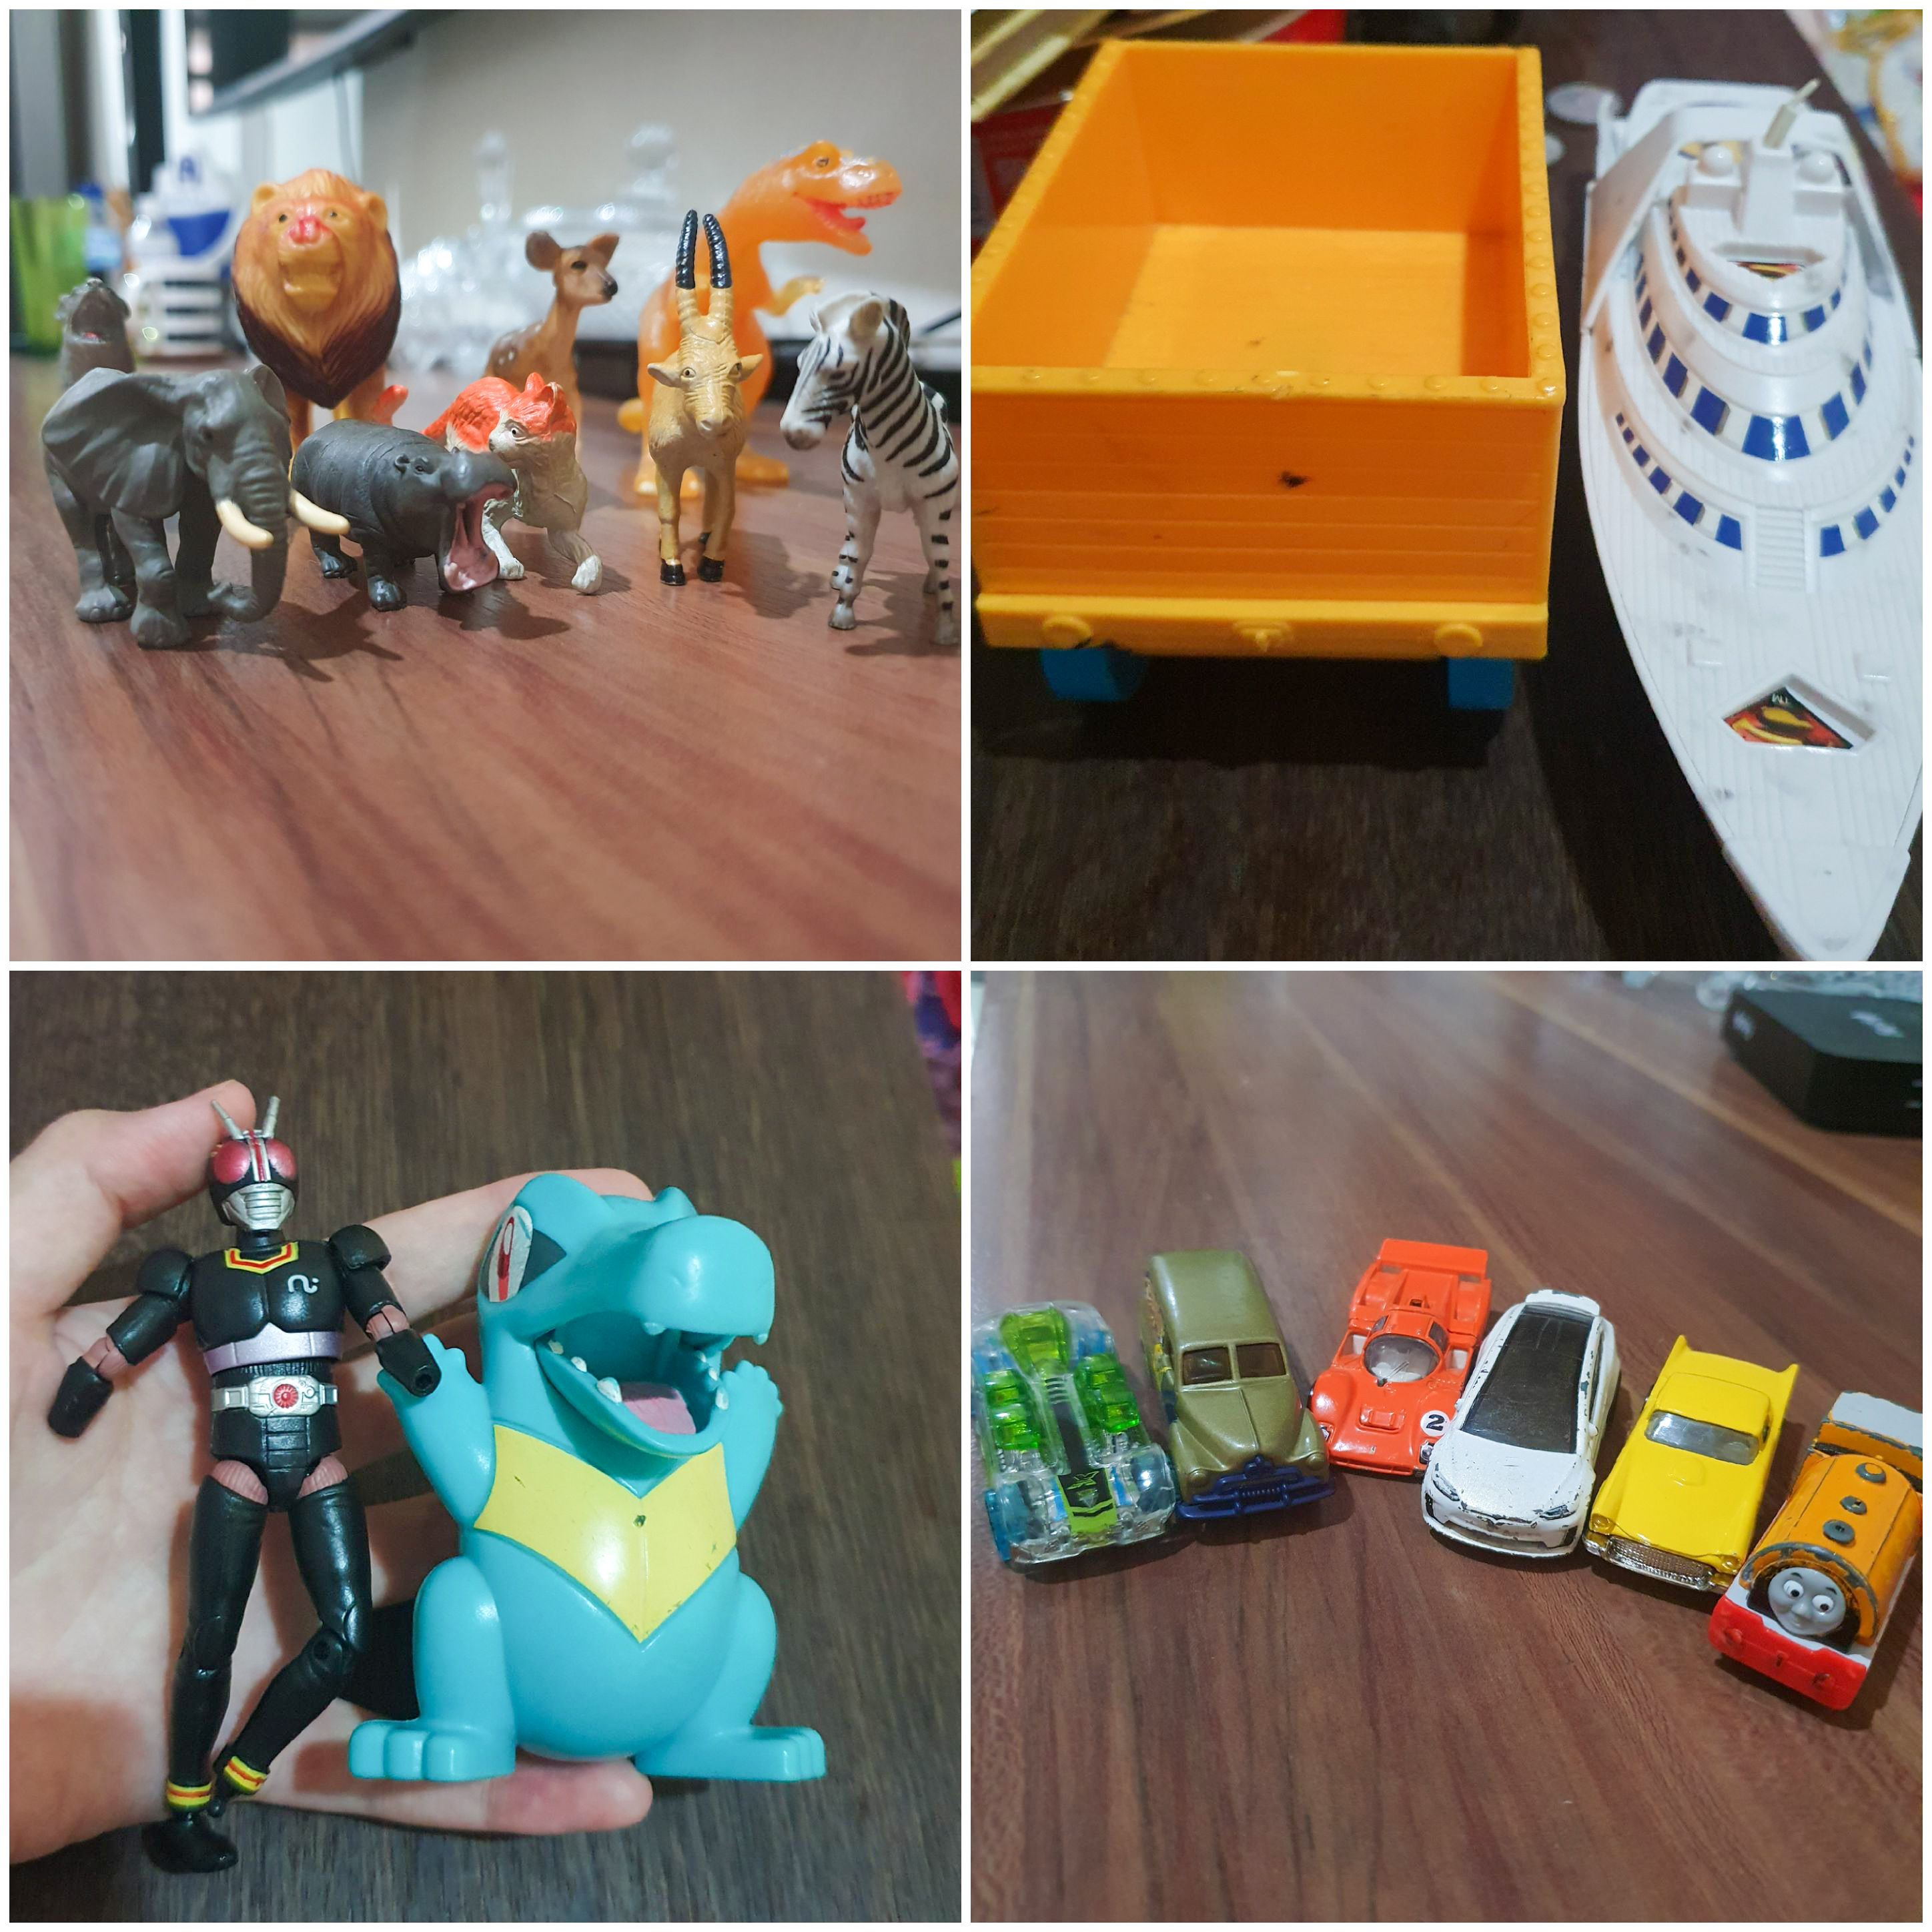 Membeli preloved mainan  anak  Popmama com Community